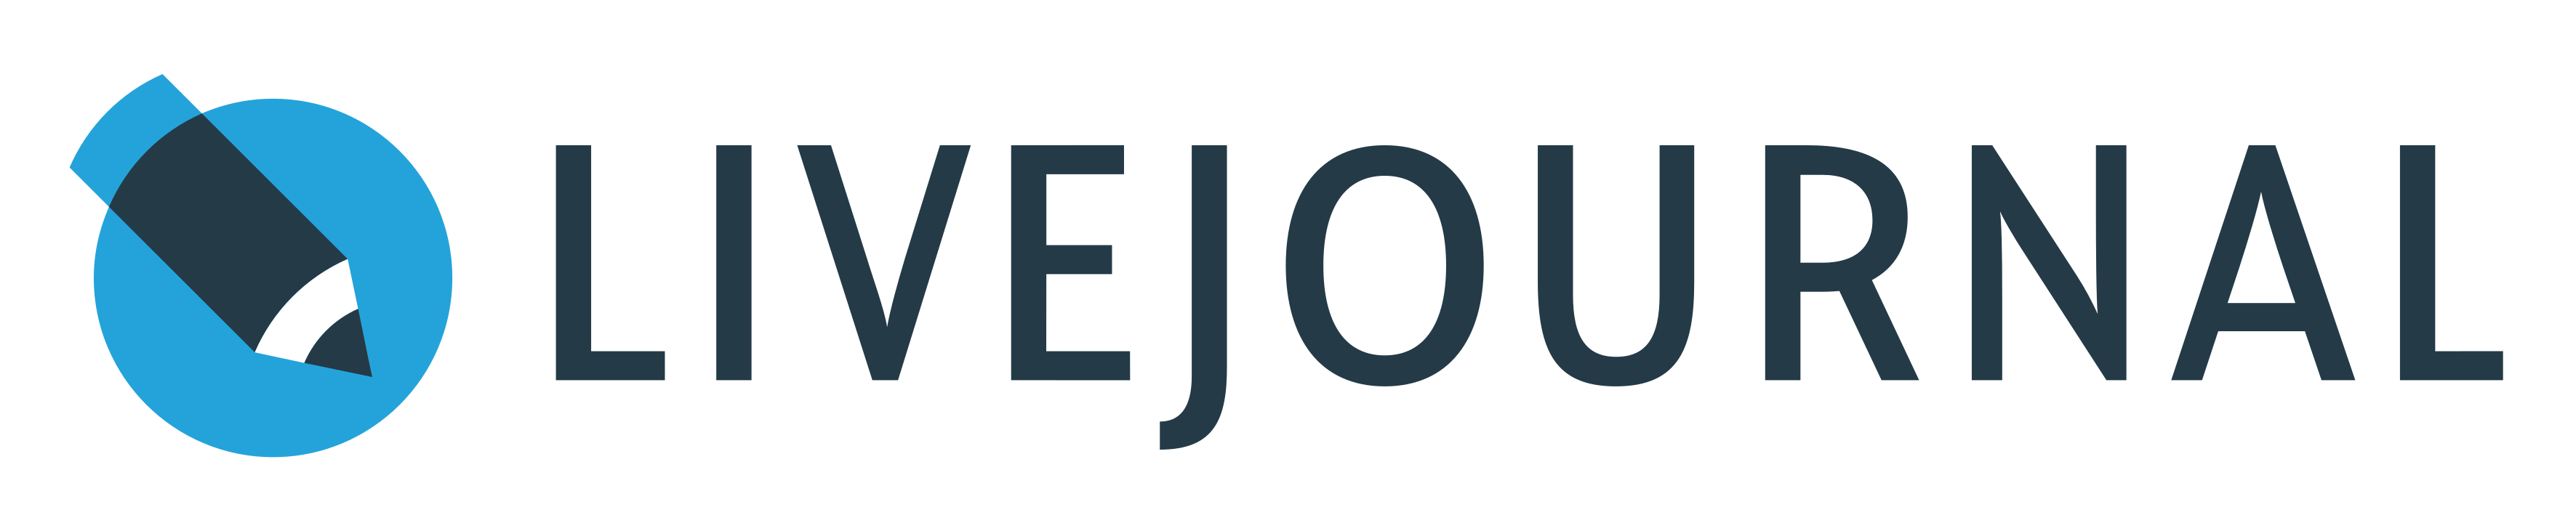 Живой журнал. Живой журнал логотип. ЖЖ журнал. Livejournal (ЖЖ).